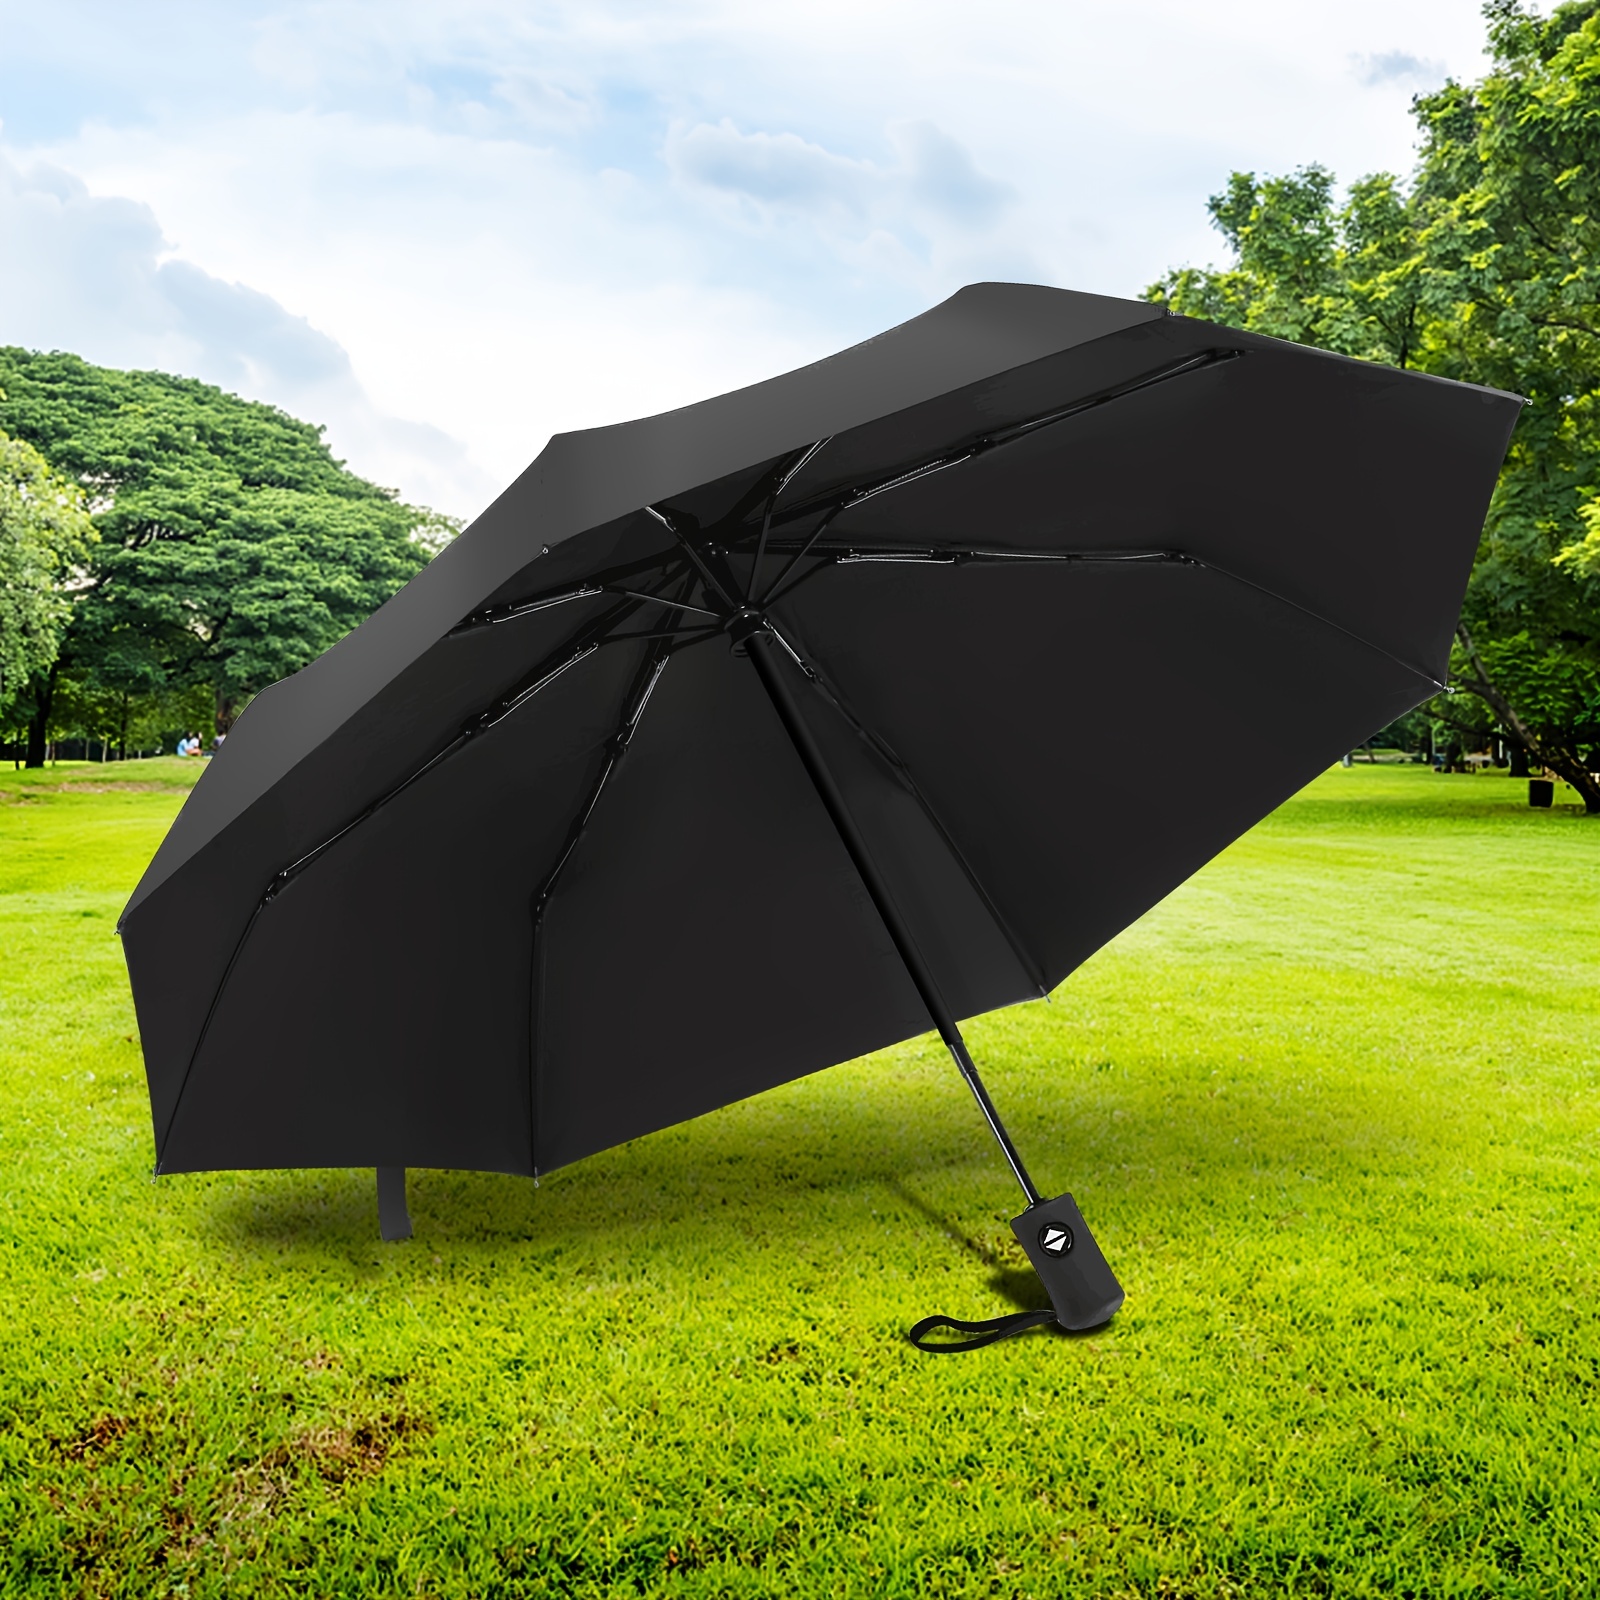 JIGUOOR 1pc Travel Umbrella 8Ribs Windproof Auto Open Close Compact Umbrella Strong Portable Folding Umbrella For Rain Sun